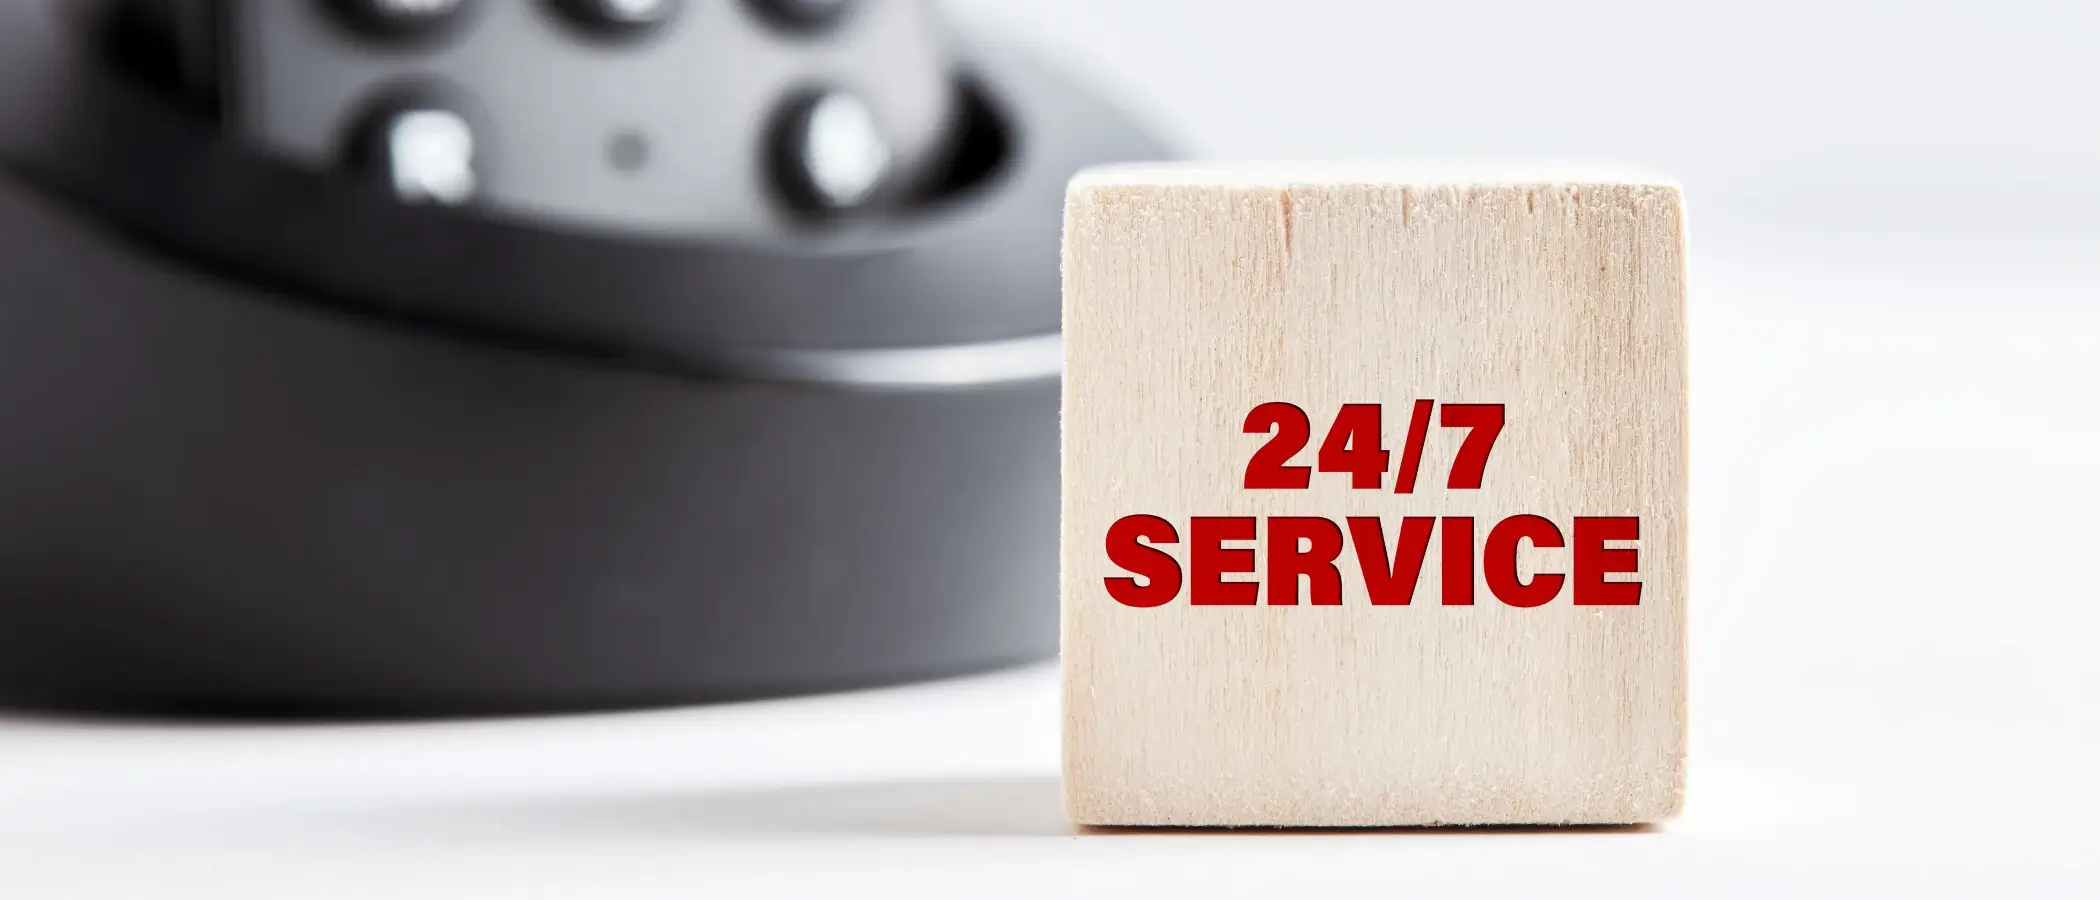 24 7 service